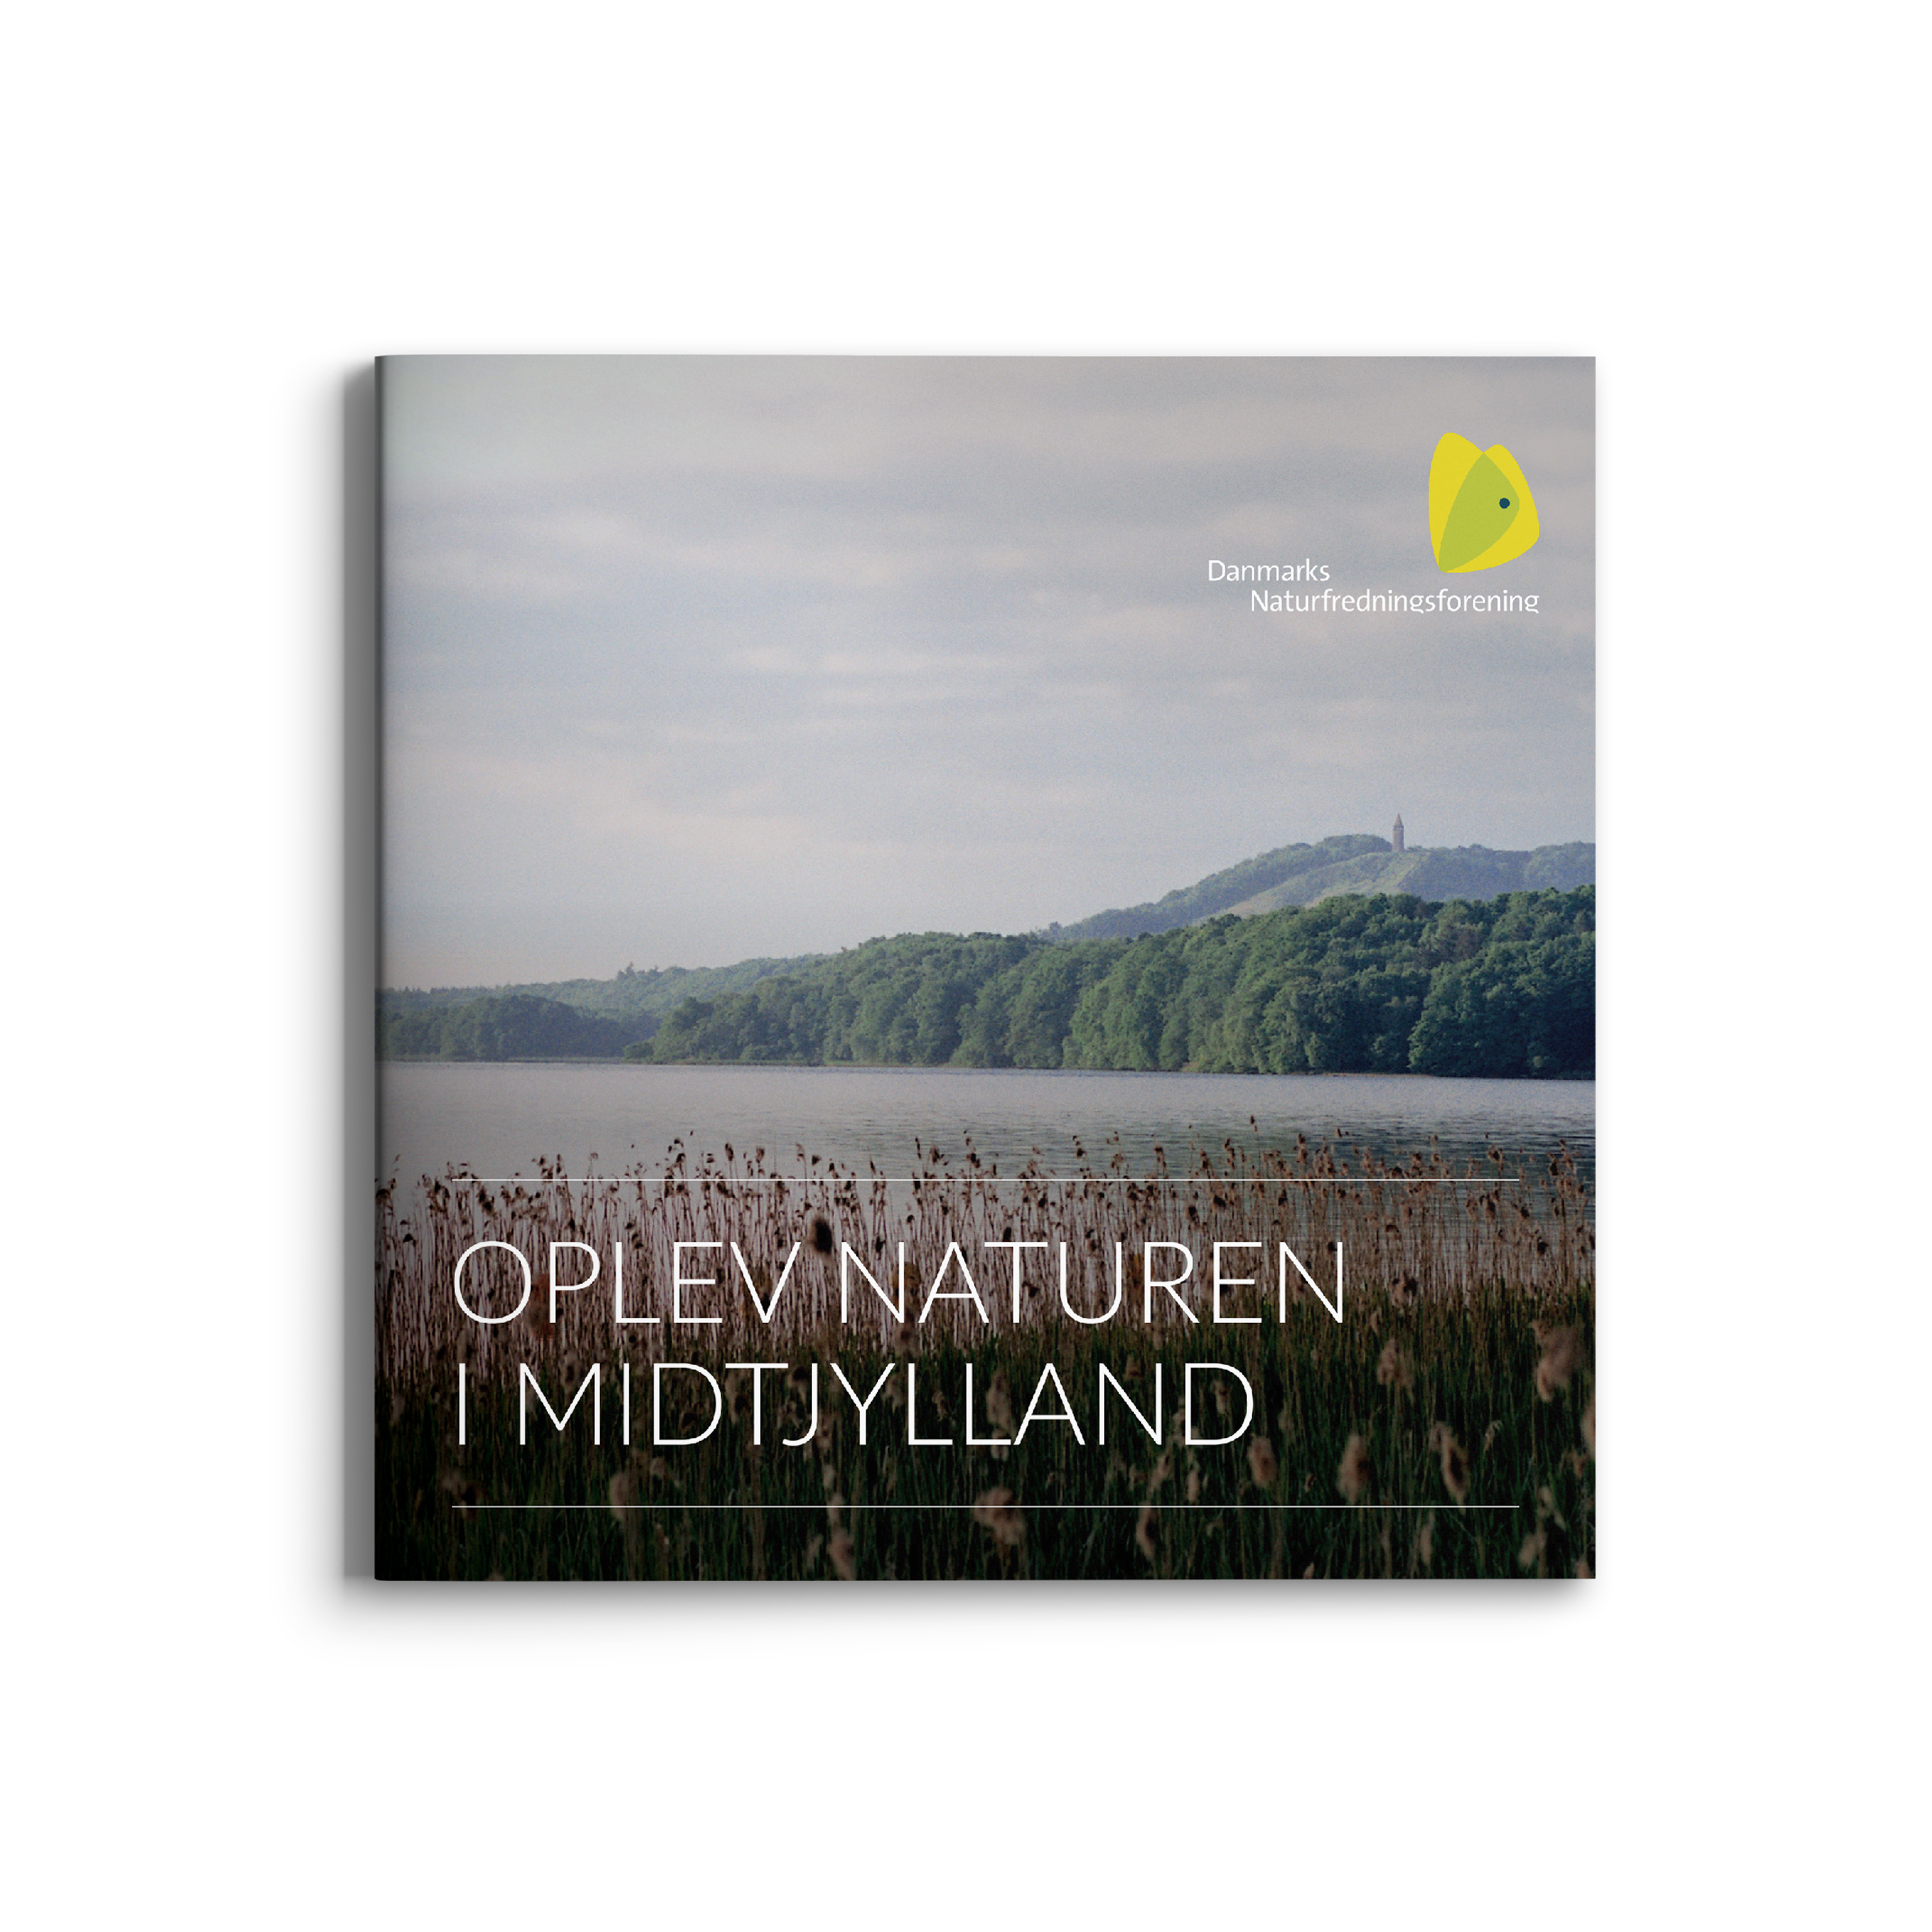 Oplev naturen i Midtjylland